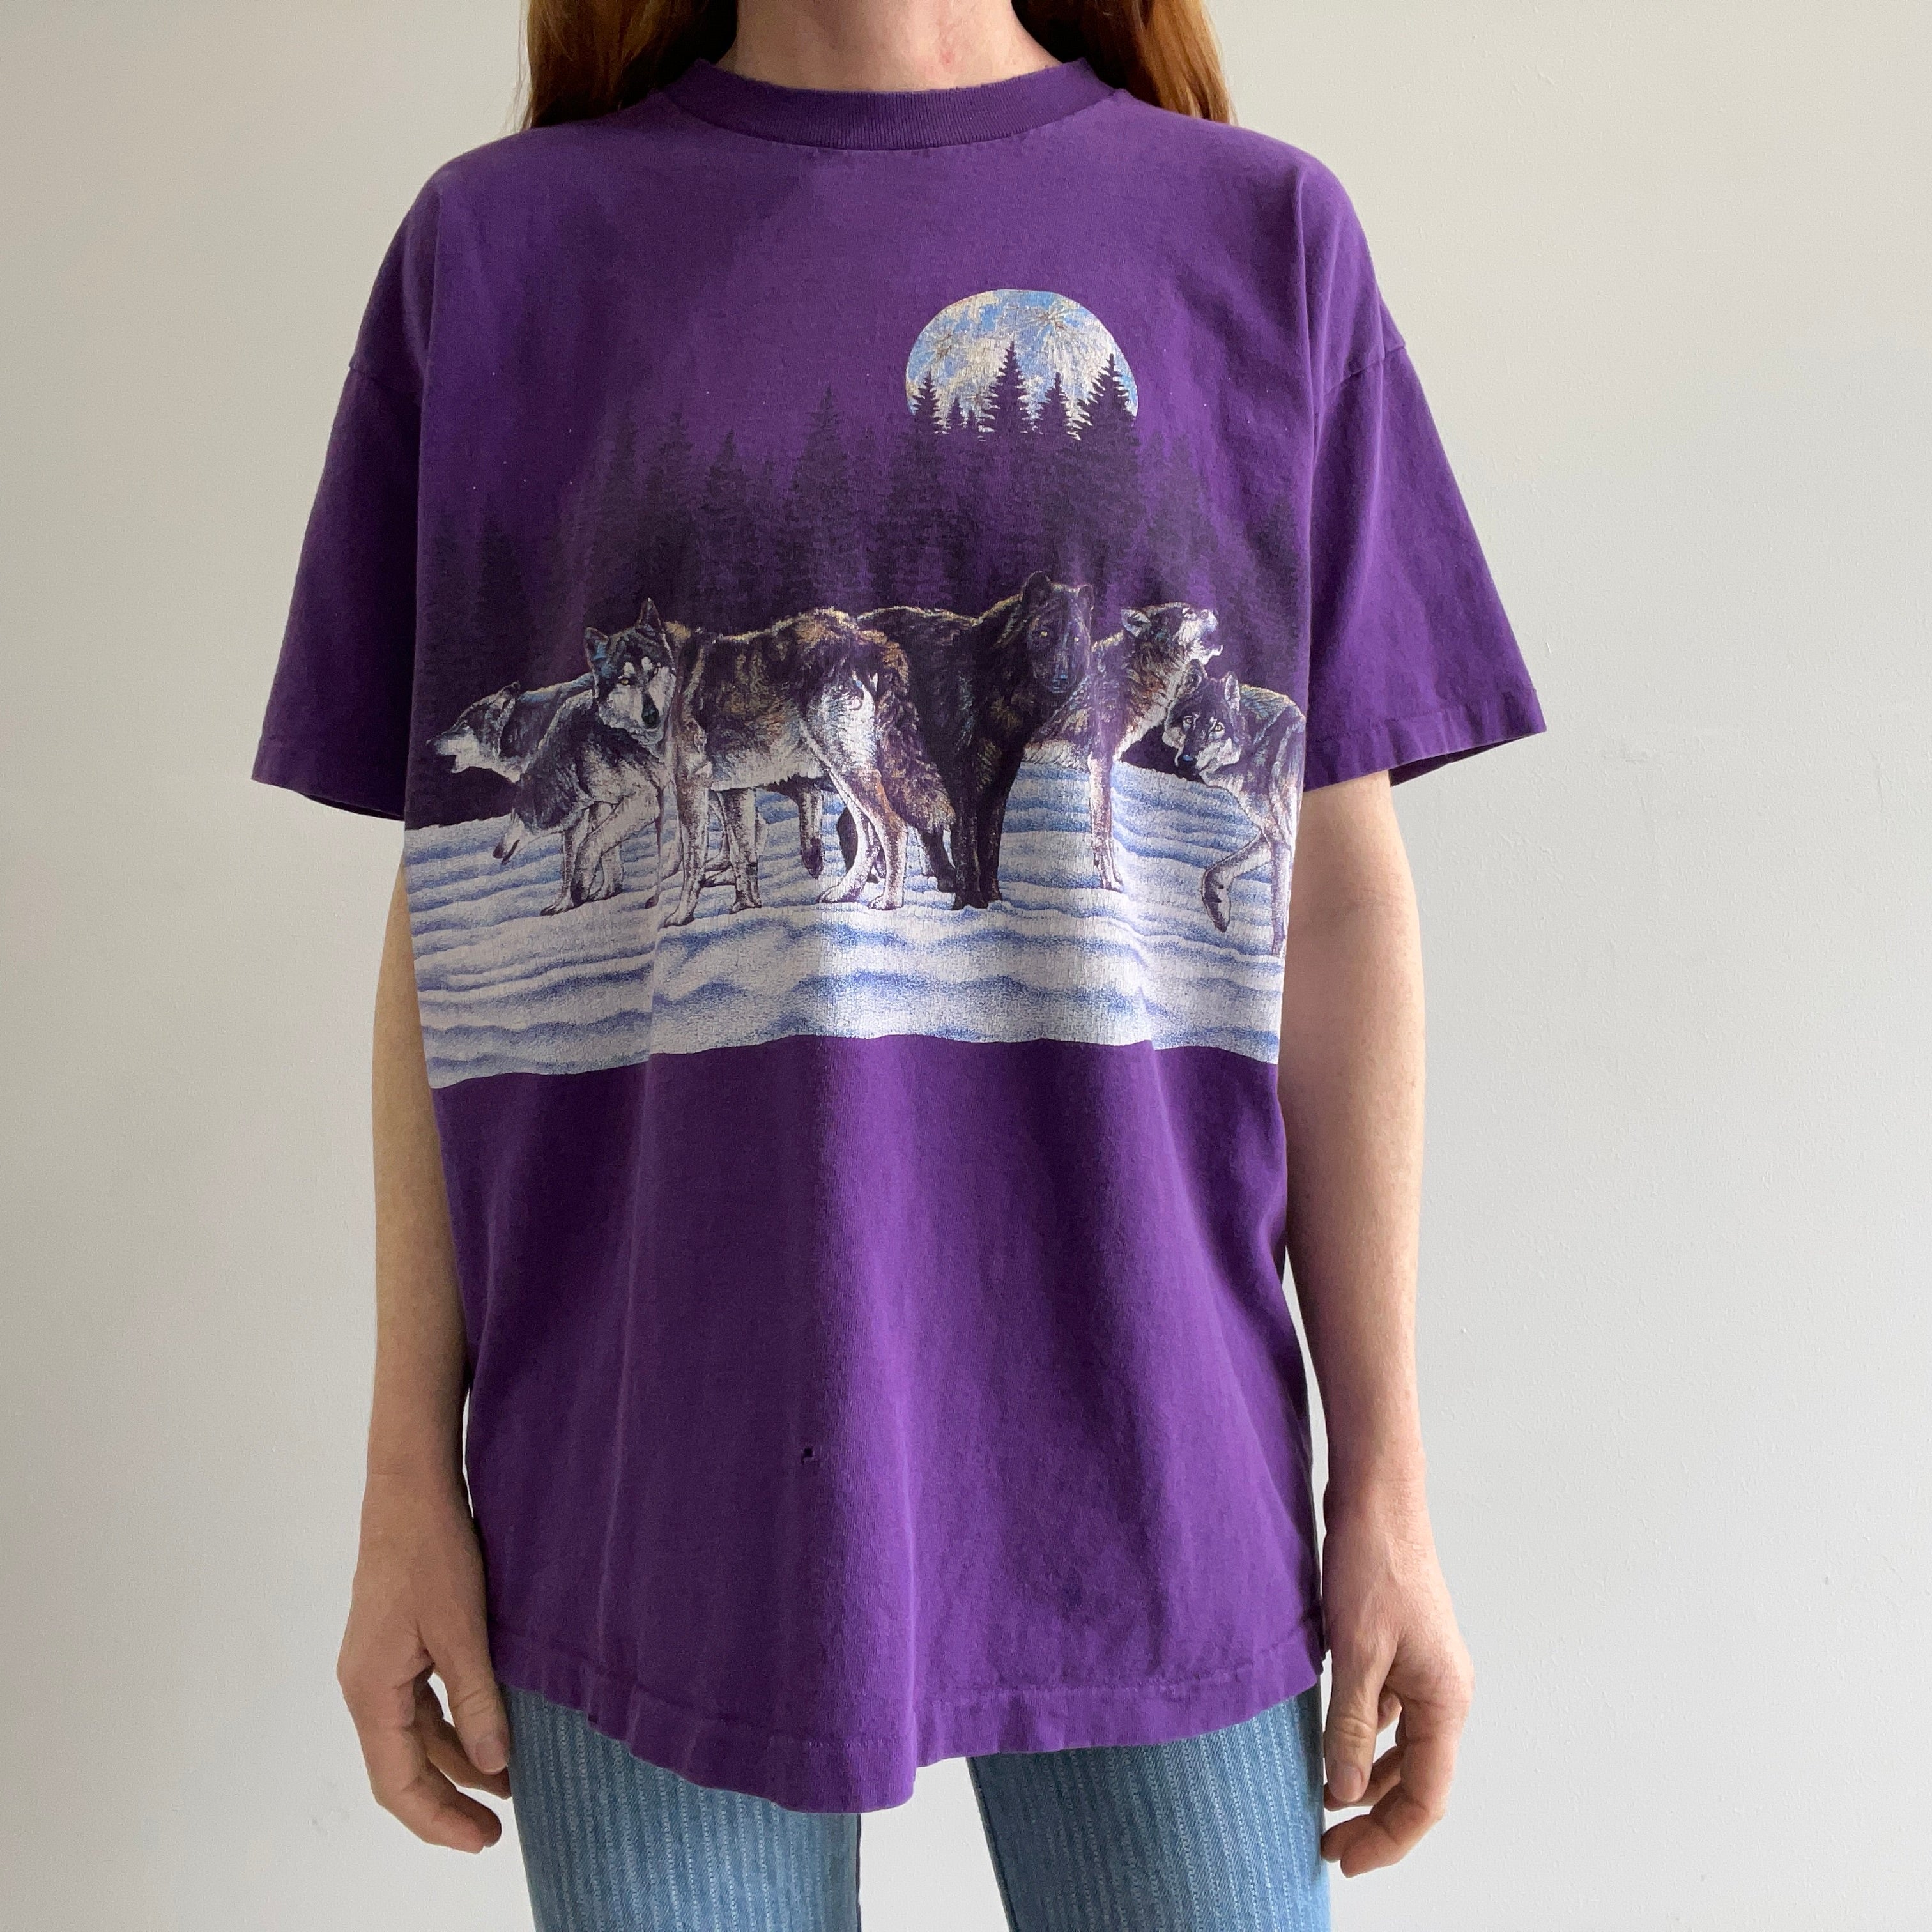 T-shirt loup enveloppant Habitat des années 1980/90 - IYKYK